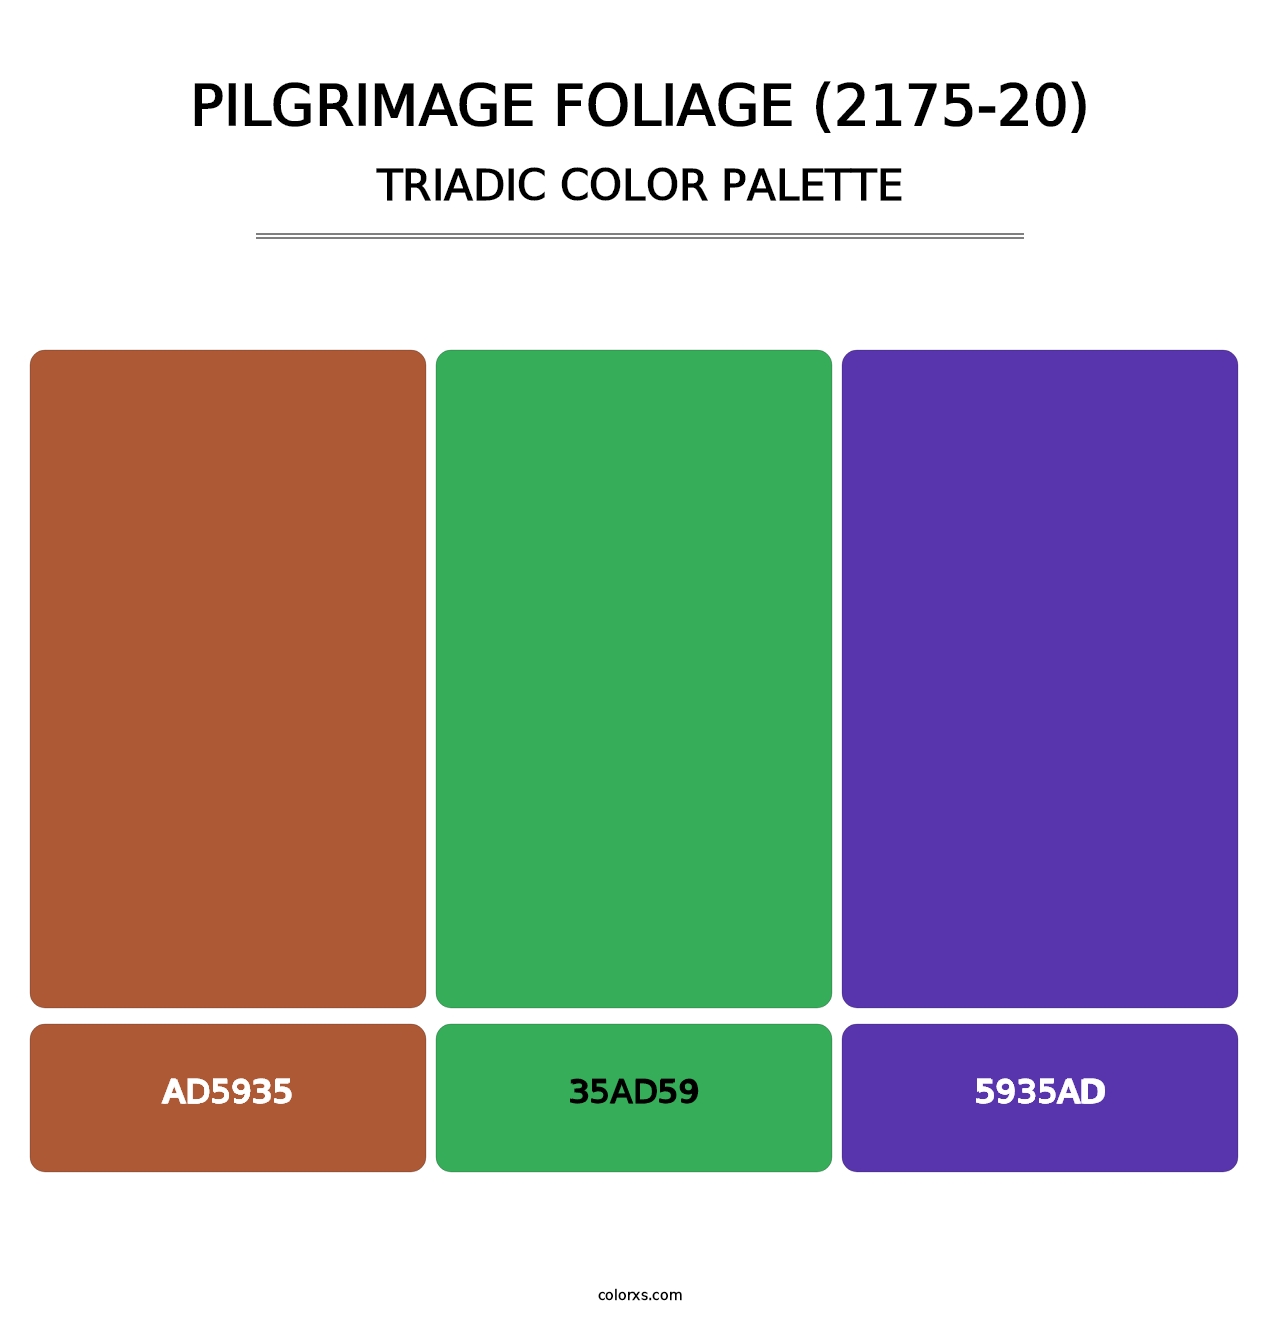 Pilgrimage Foliage (2175-20) - Triadic Color Palette